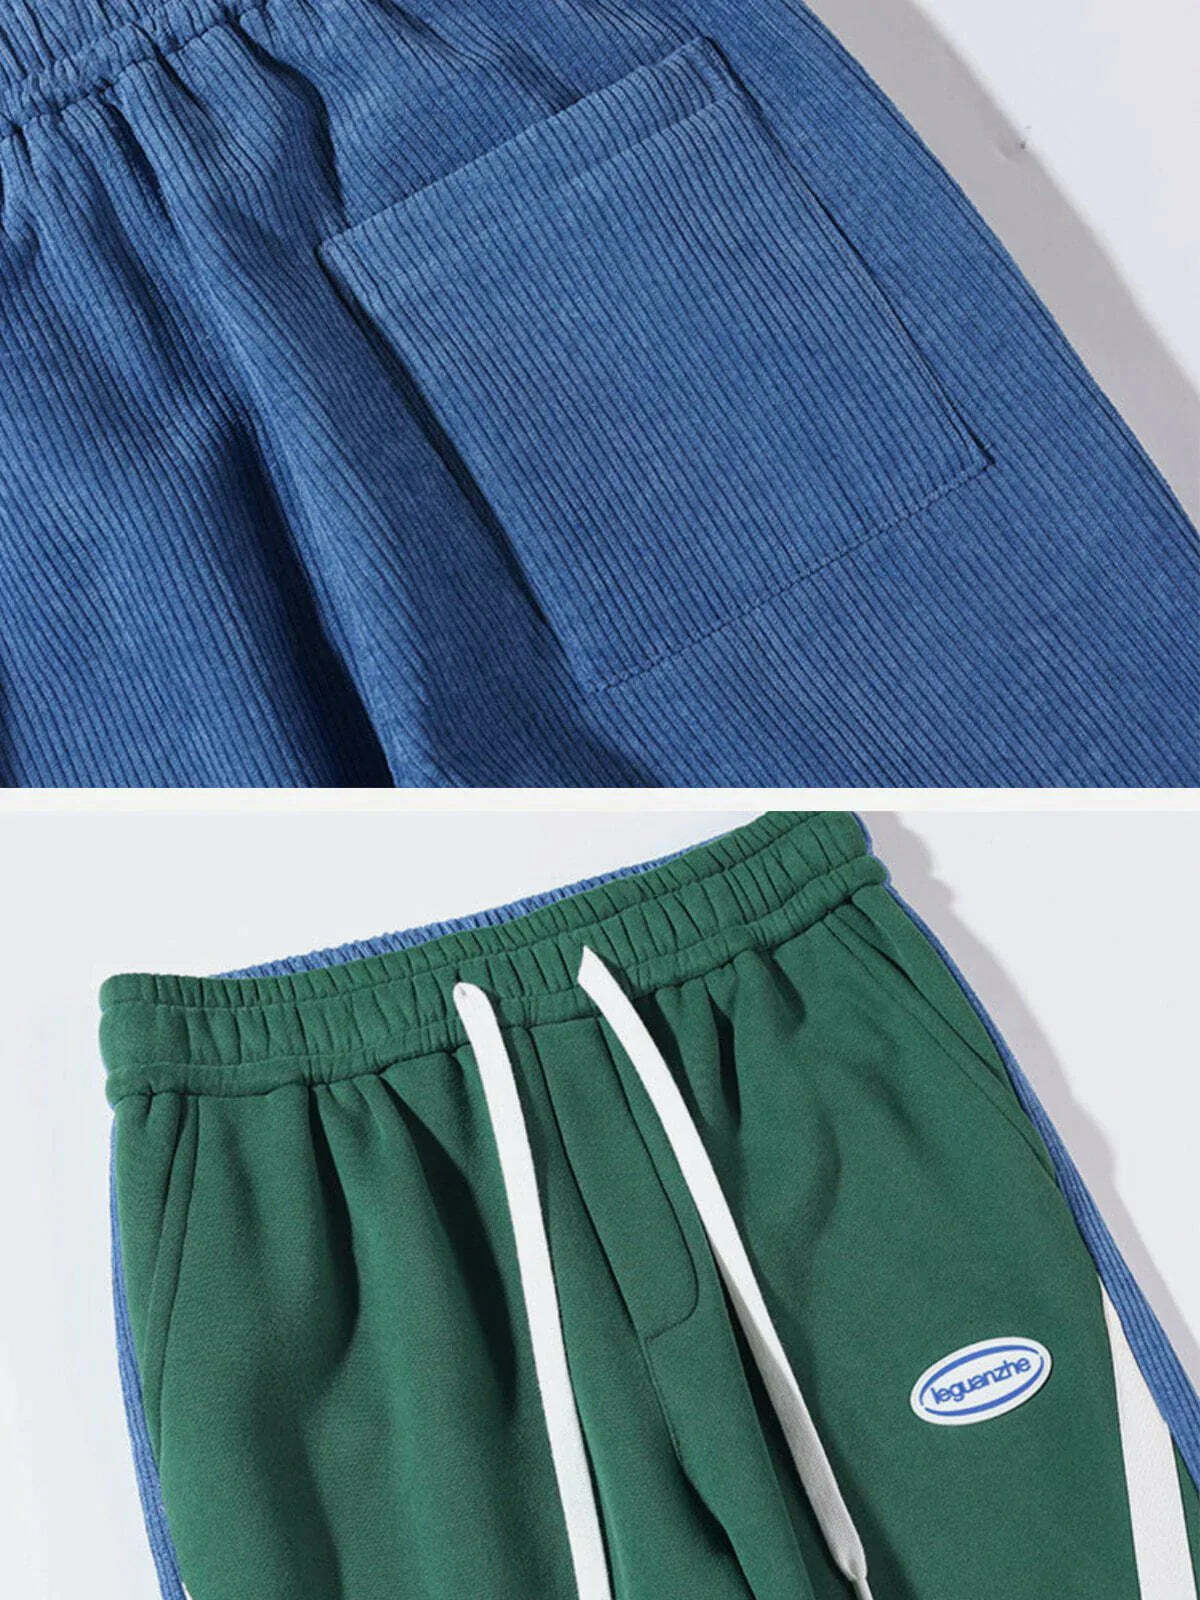 contrast corduroy sweatpants edgy & retro streetwear 3388